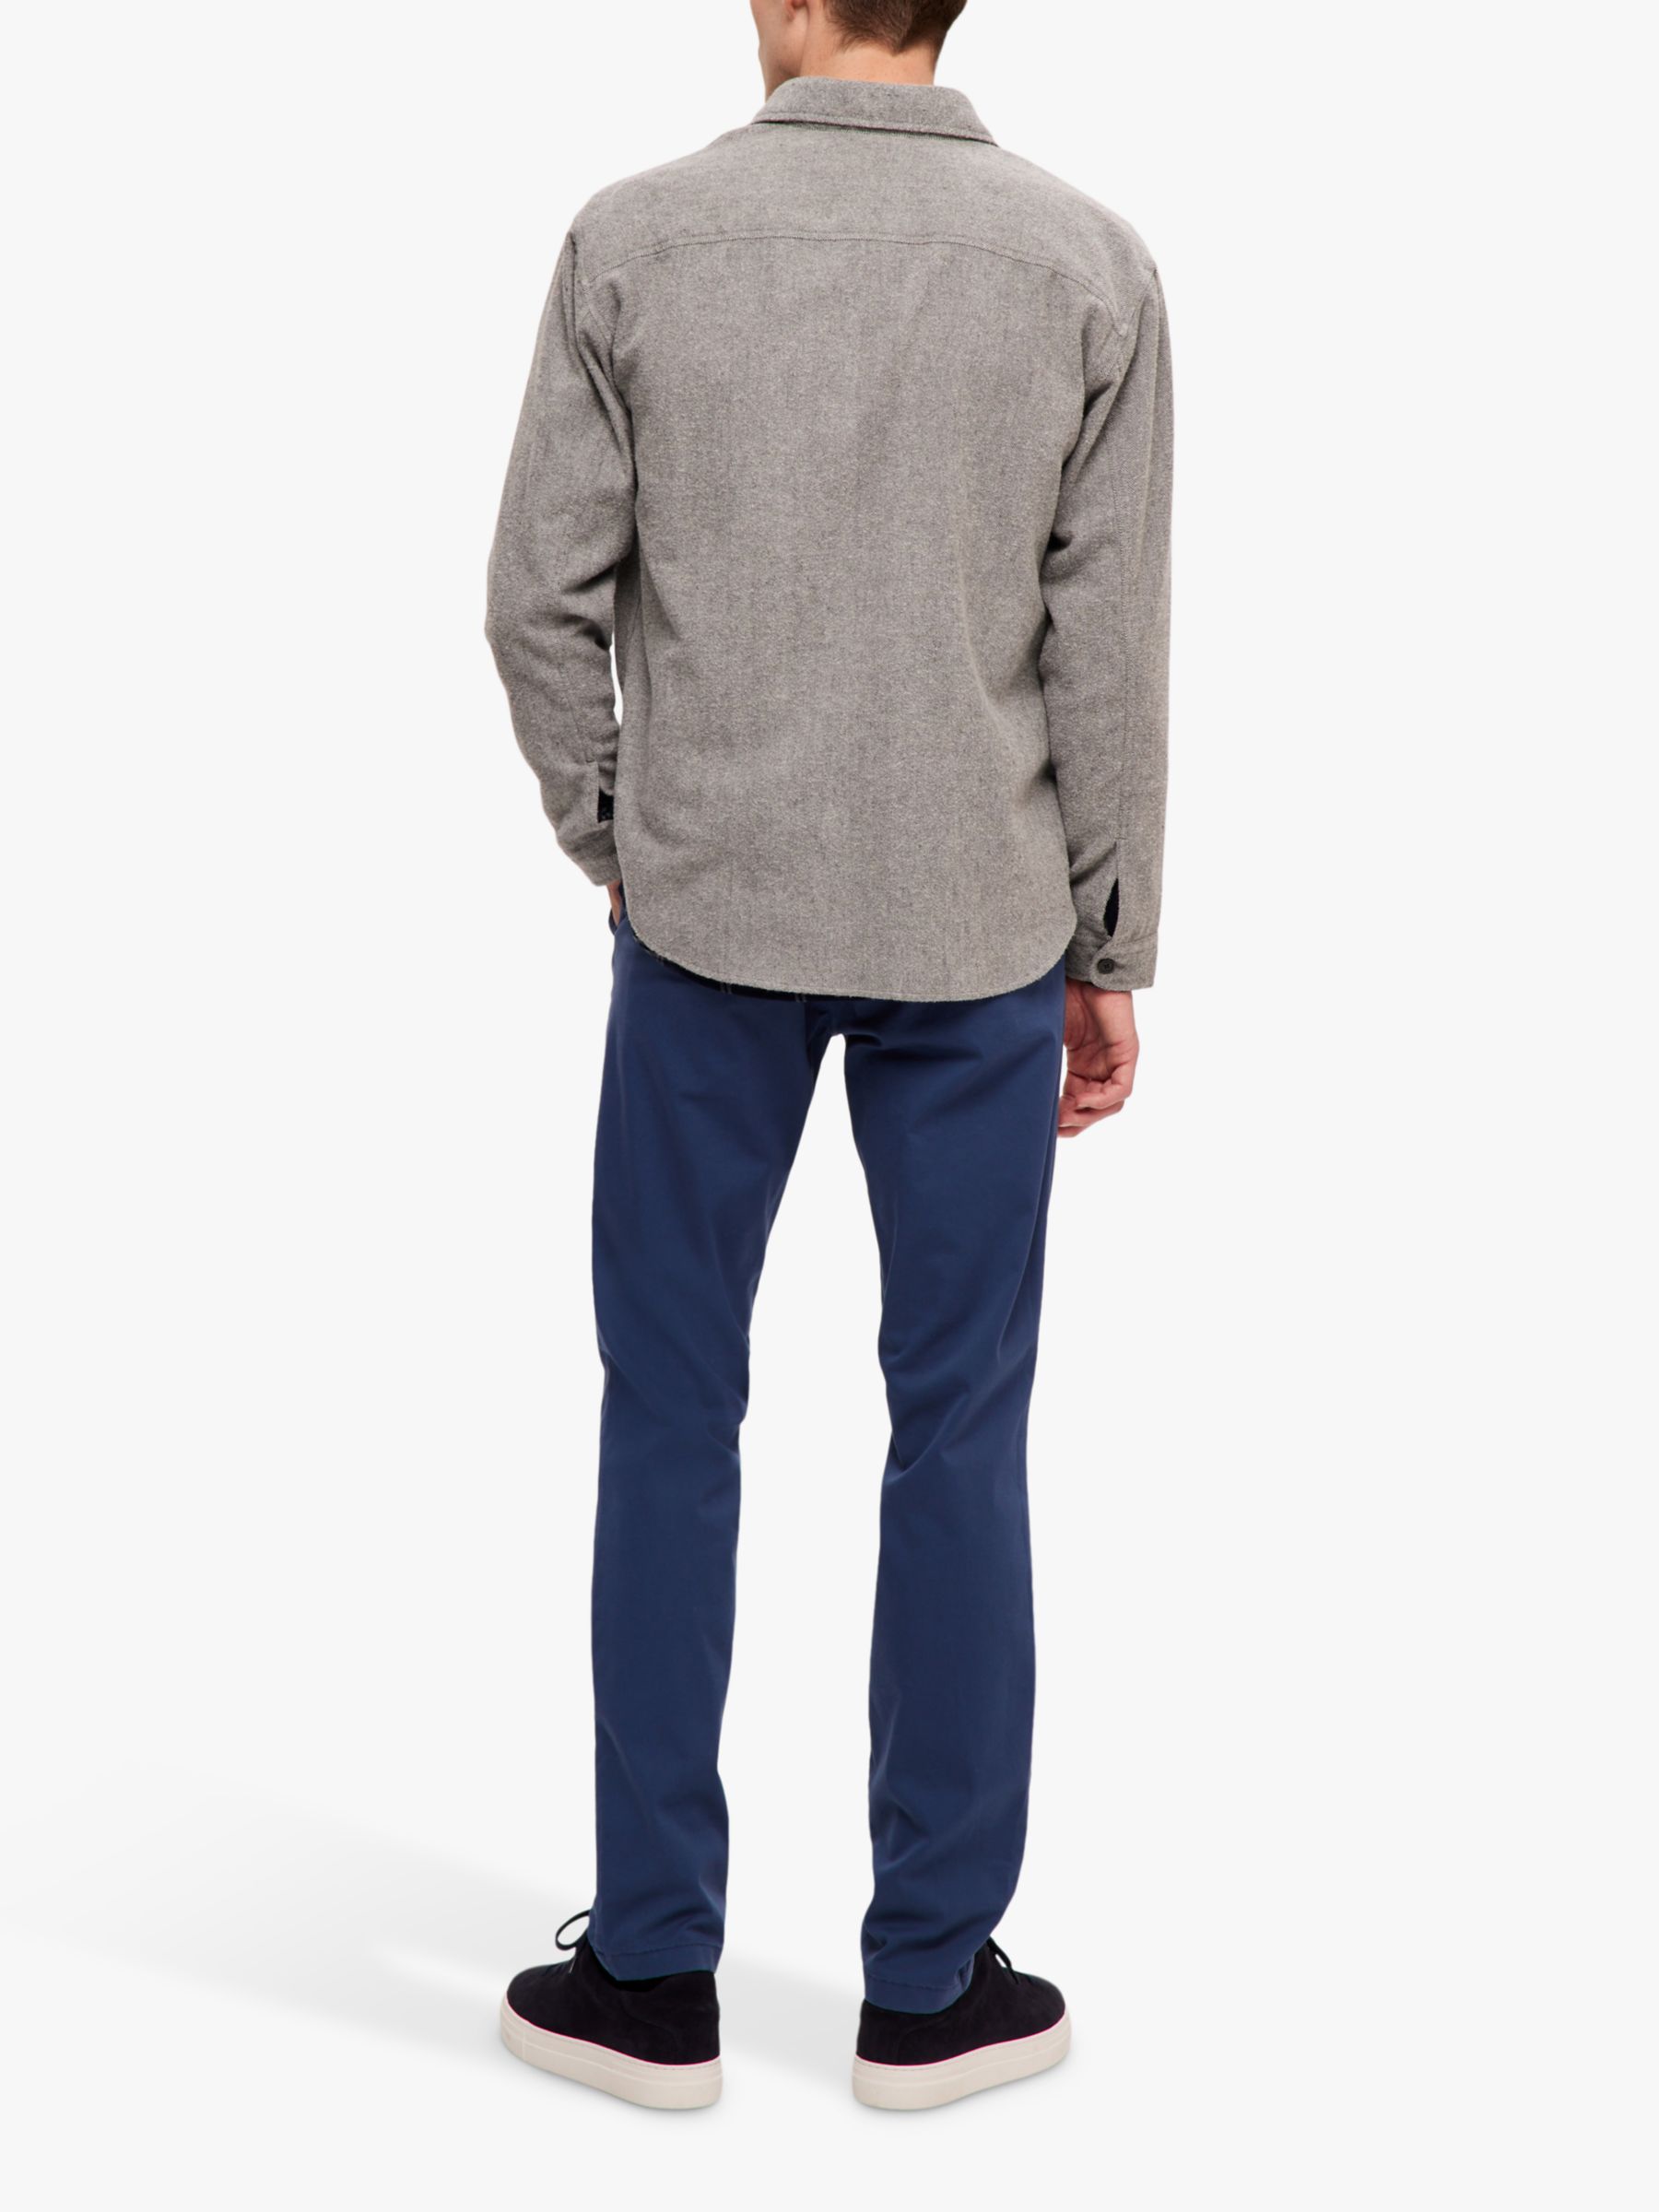 SELECTED HOMME Mason Twill Overshirt, Grey at John Lewis & Partners